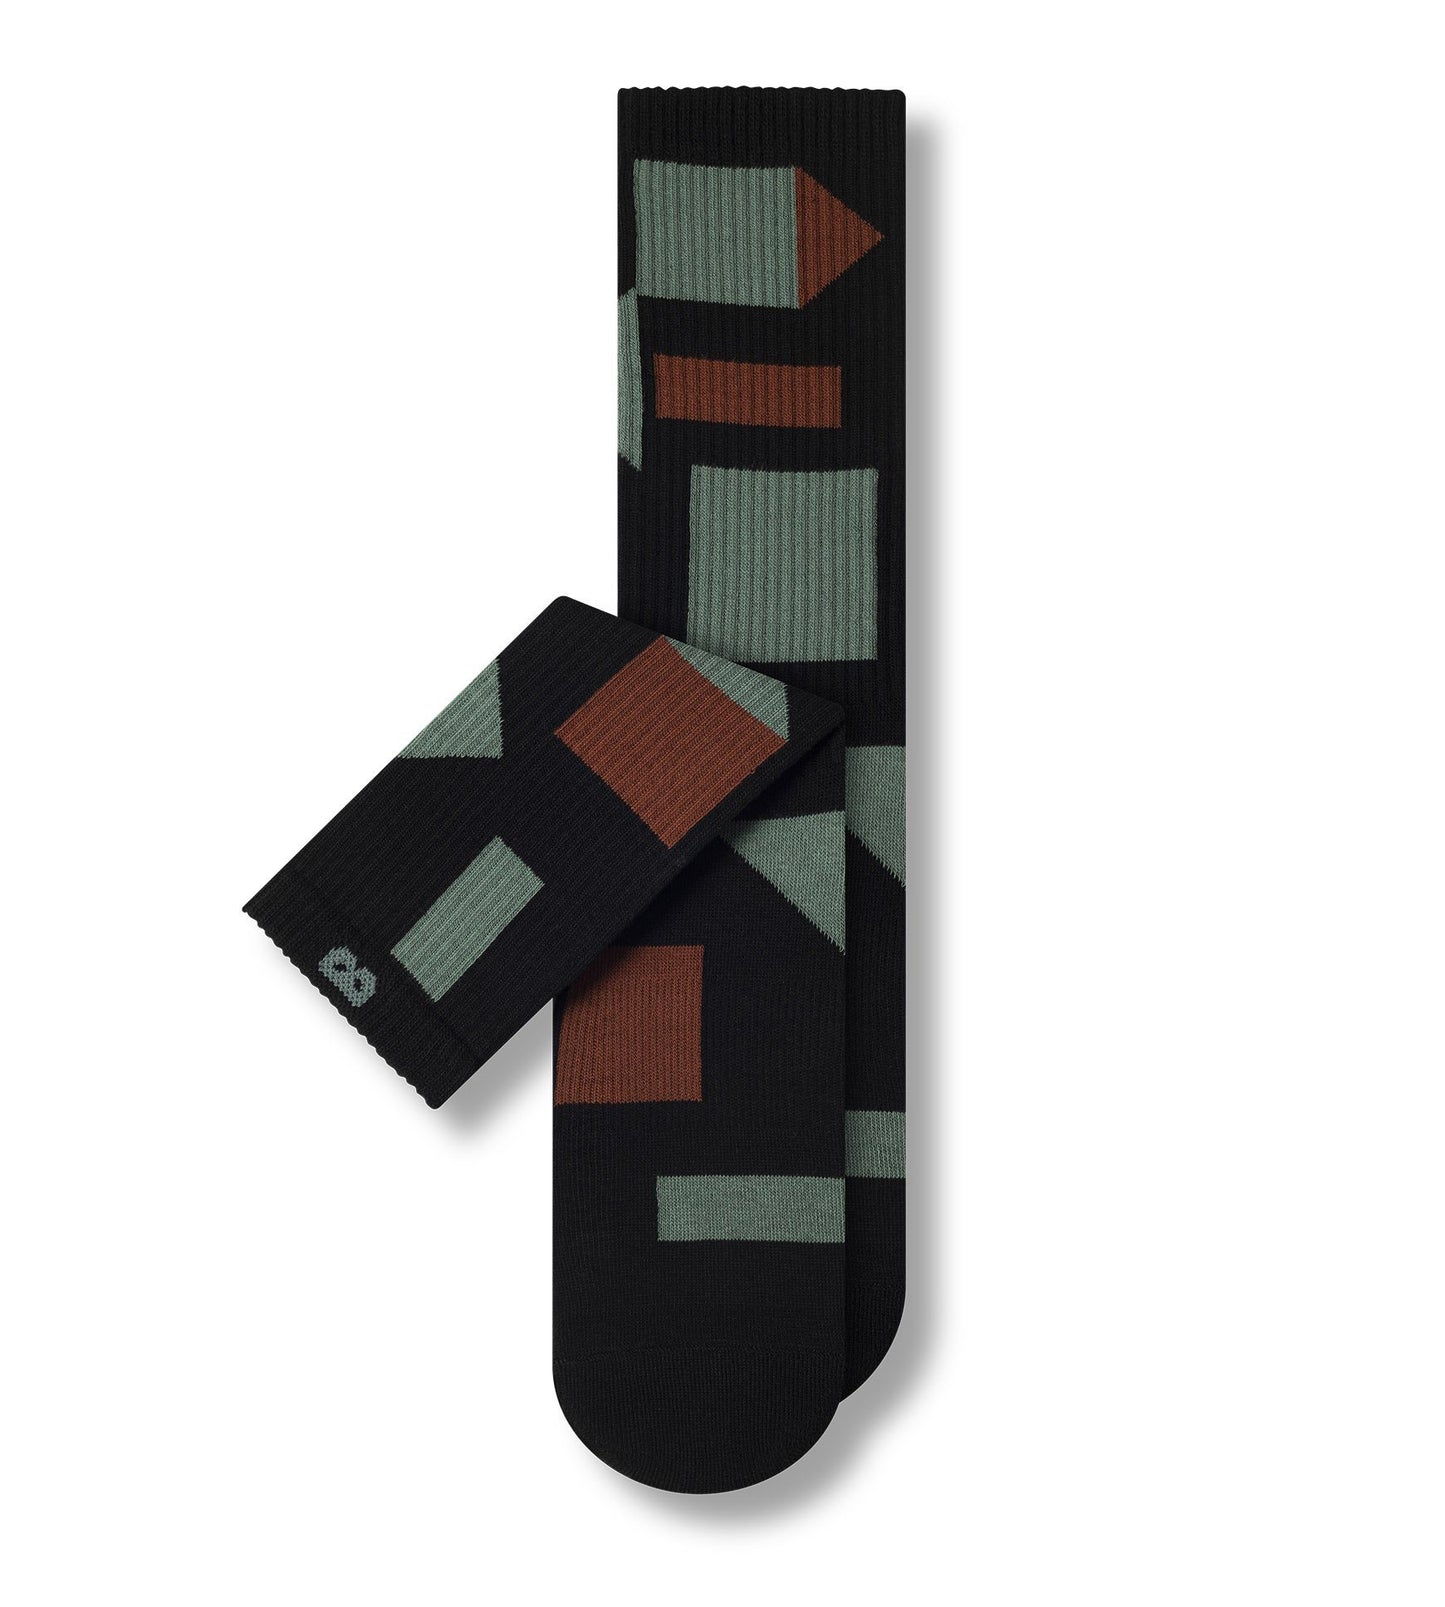 Cushion Crew Socks 3 Pack contains colors Maroon, Gray, Dark Gray, Black, Dark slate gray, Light Gray, Black, Saddle brown, Dim gray